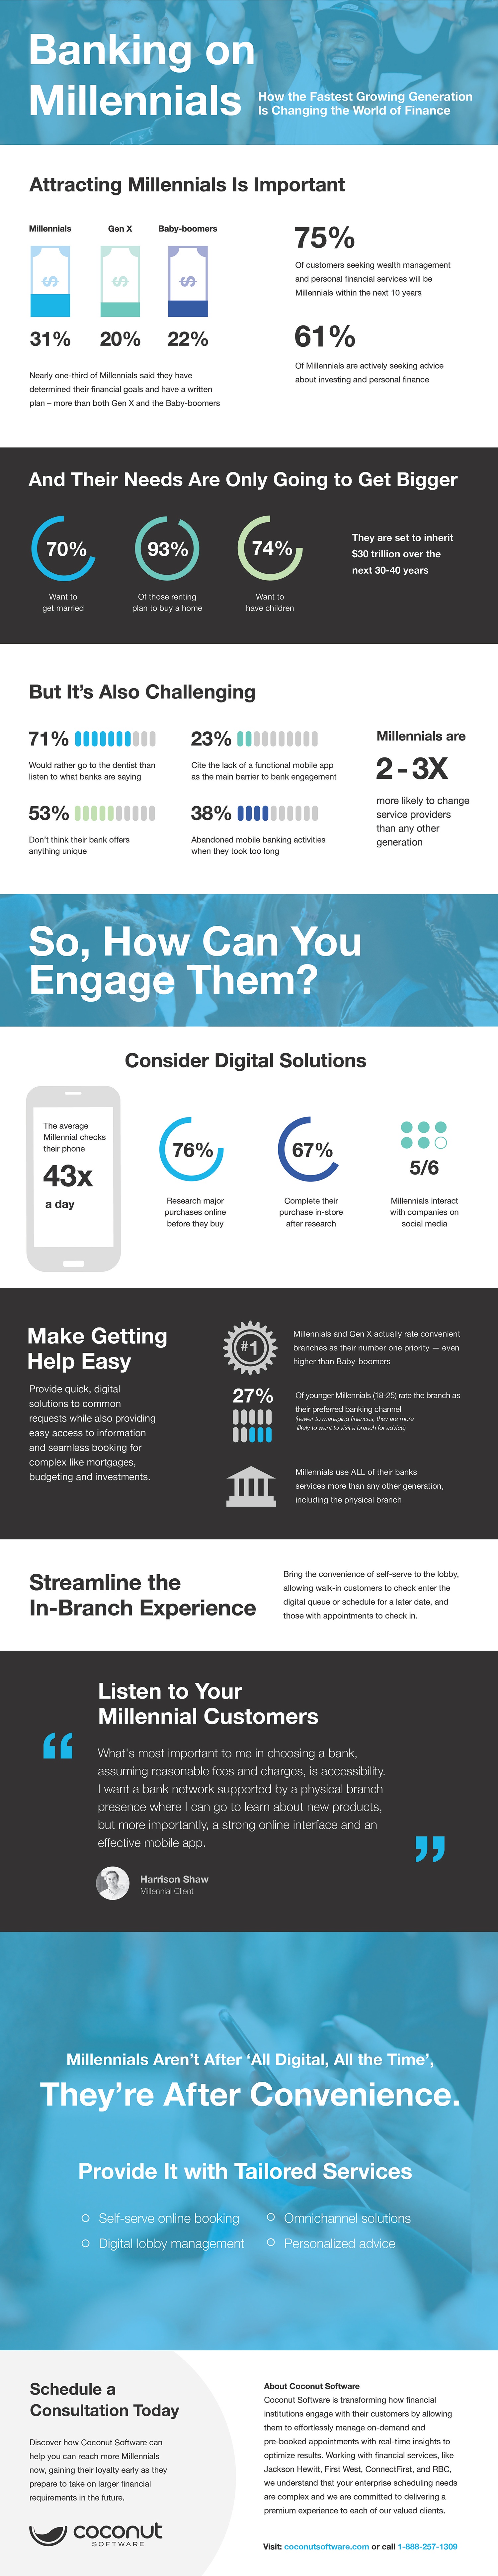 Banking on Millennials Infographic